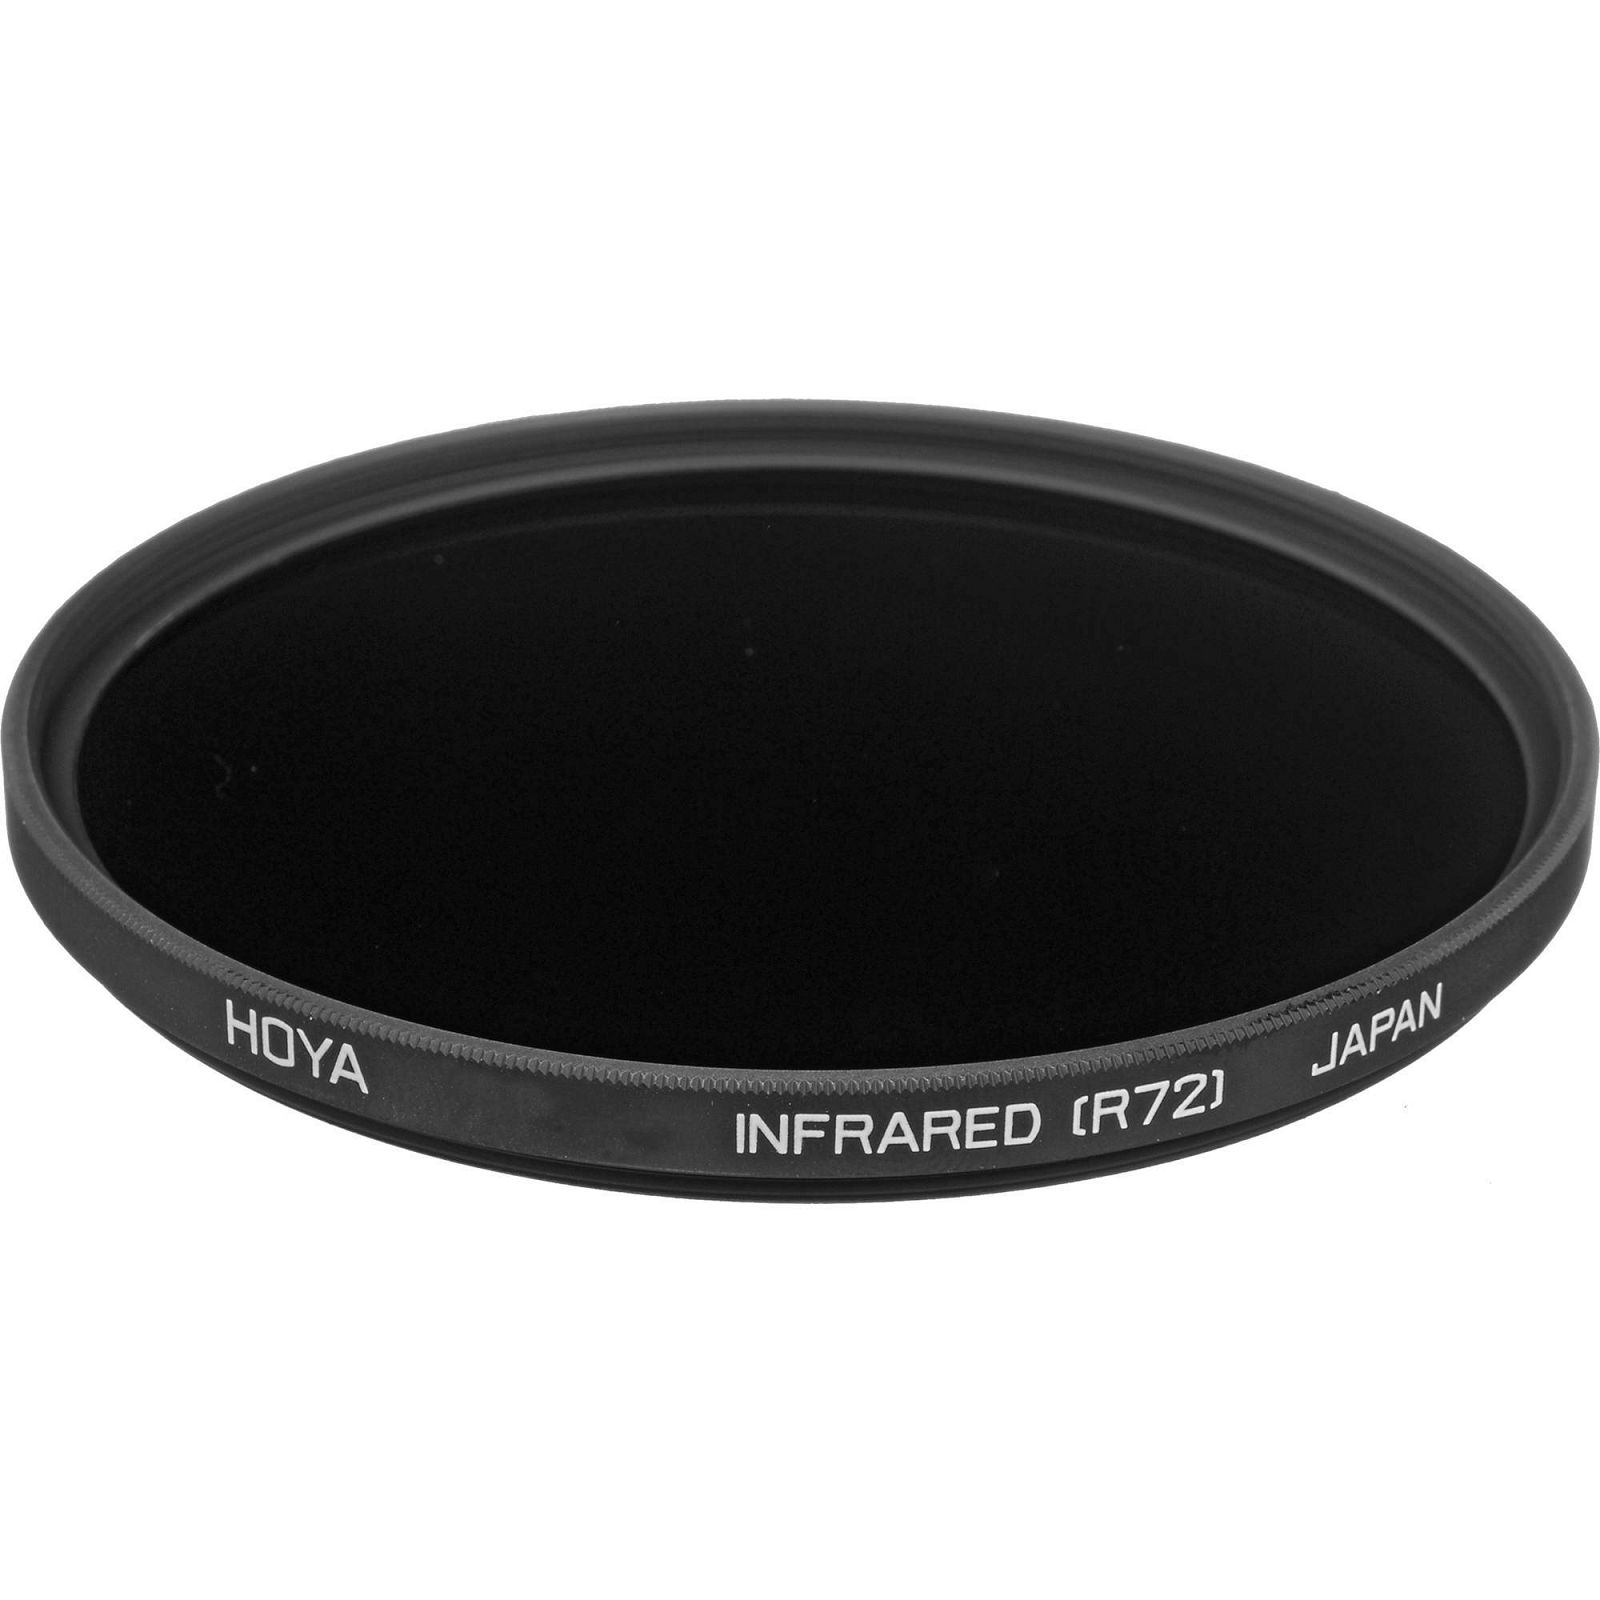 Hoya Infrared R72 filter 55mm